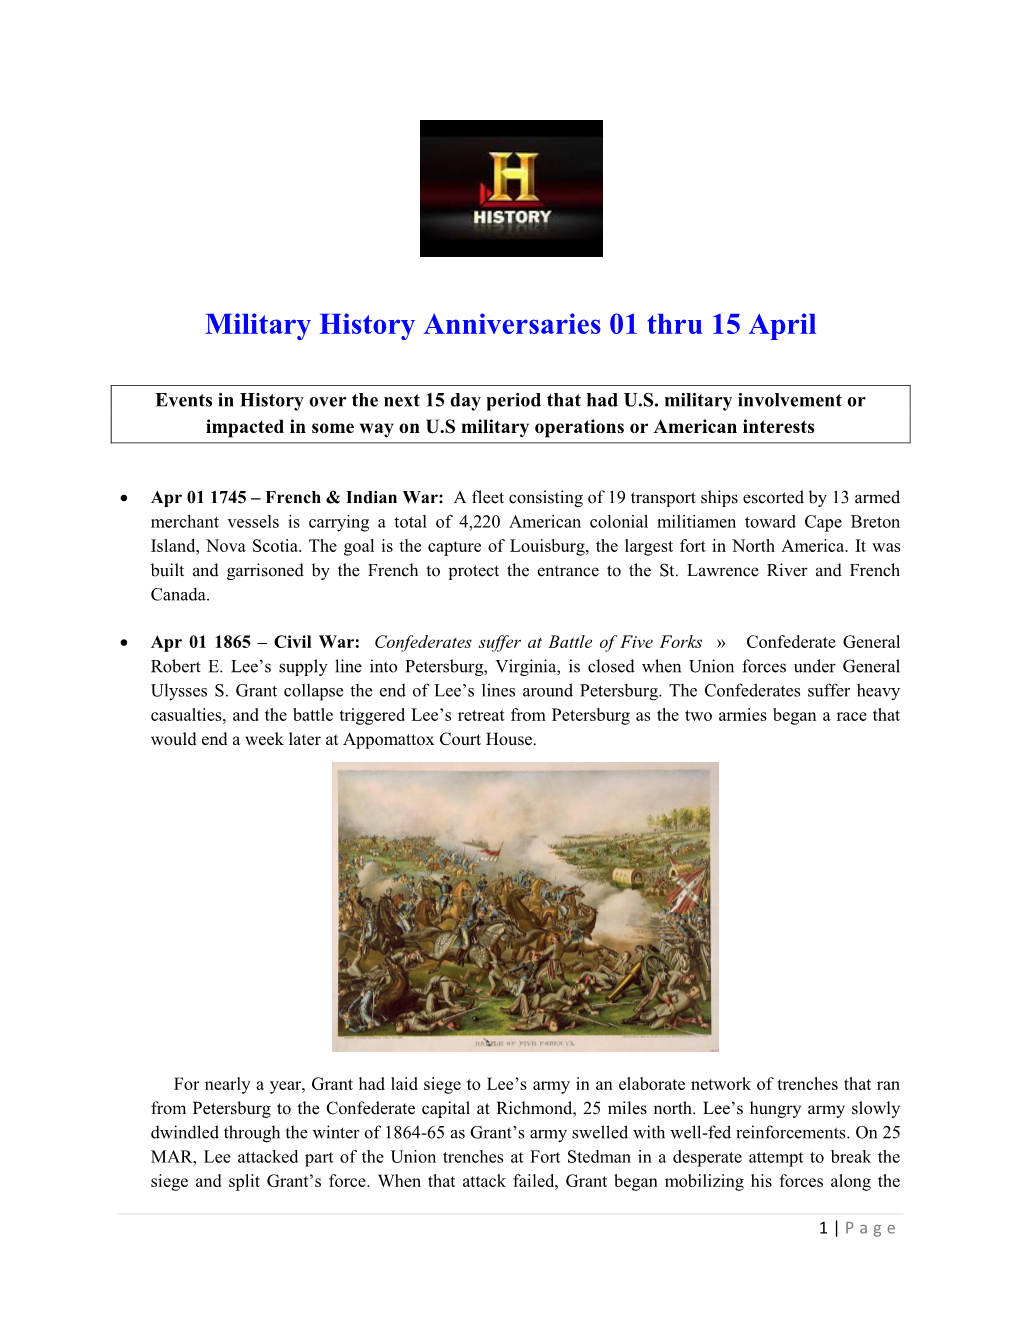 Military History Anniversaries 01 Thru 15 April